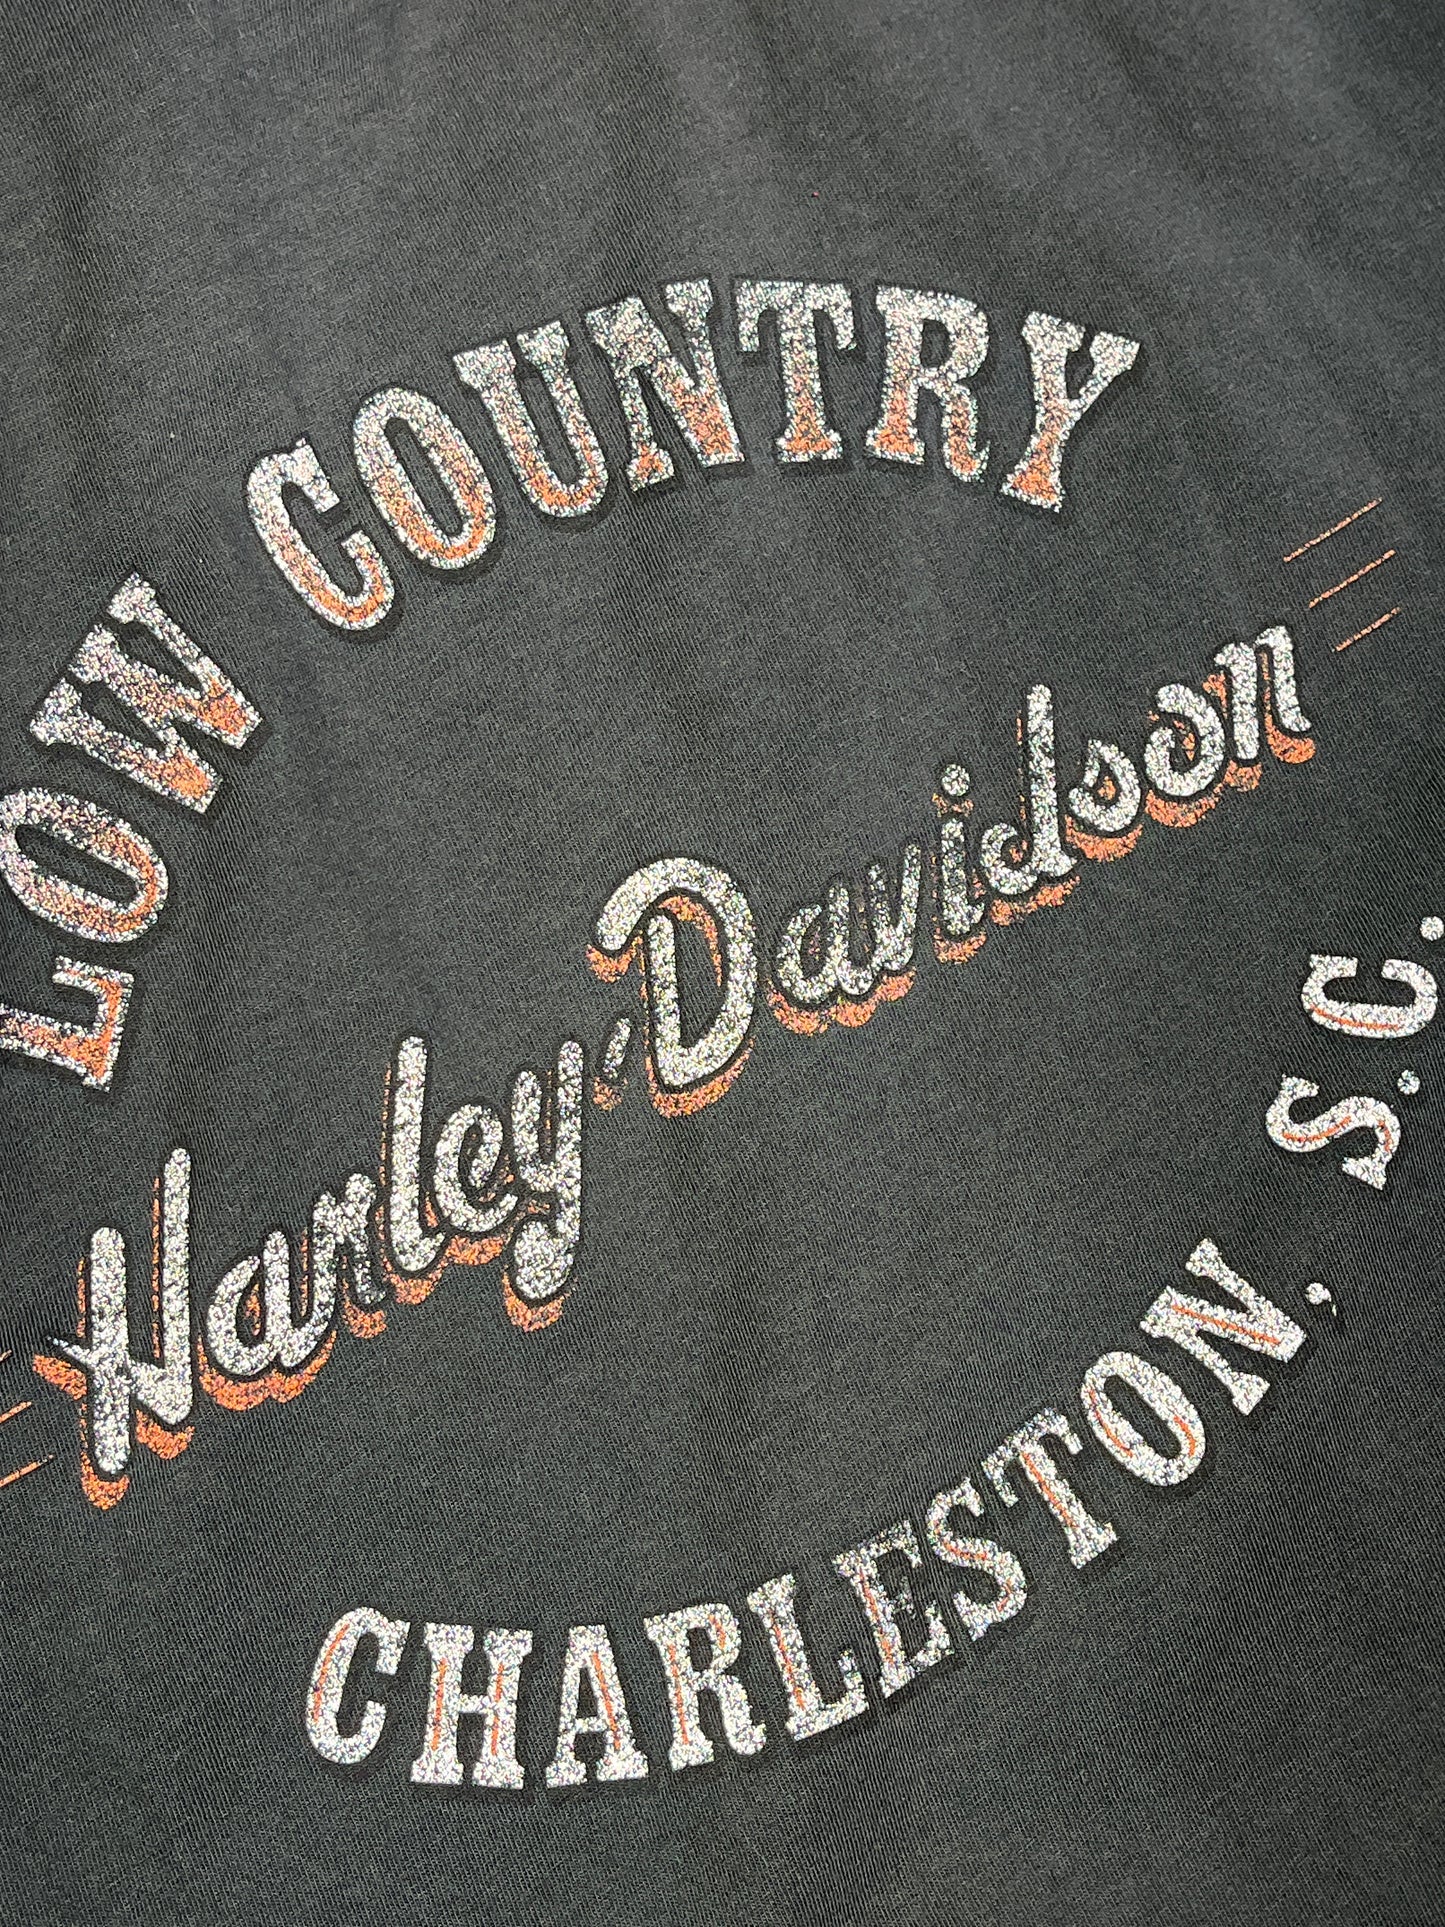 Vintage Harley Davidson T-Shirt Pocket Tee Charleston South Carolina Low Country Distressed